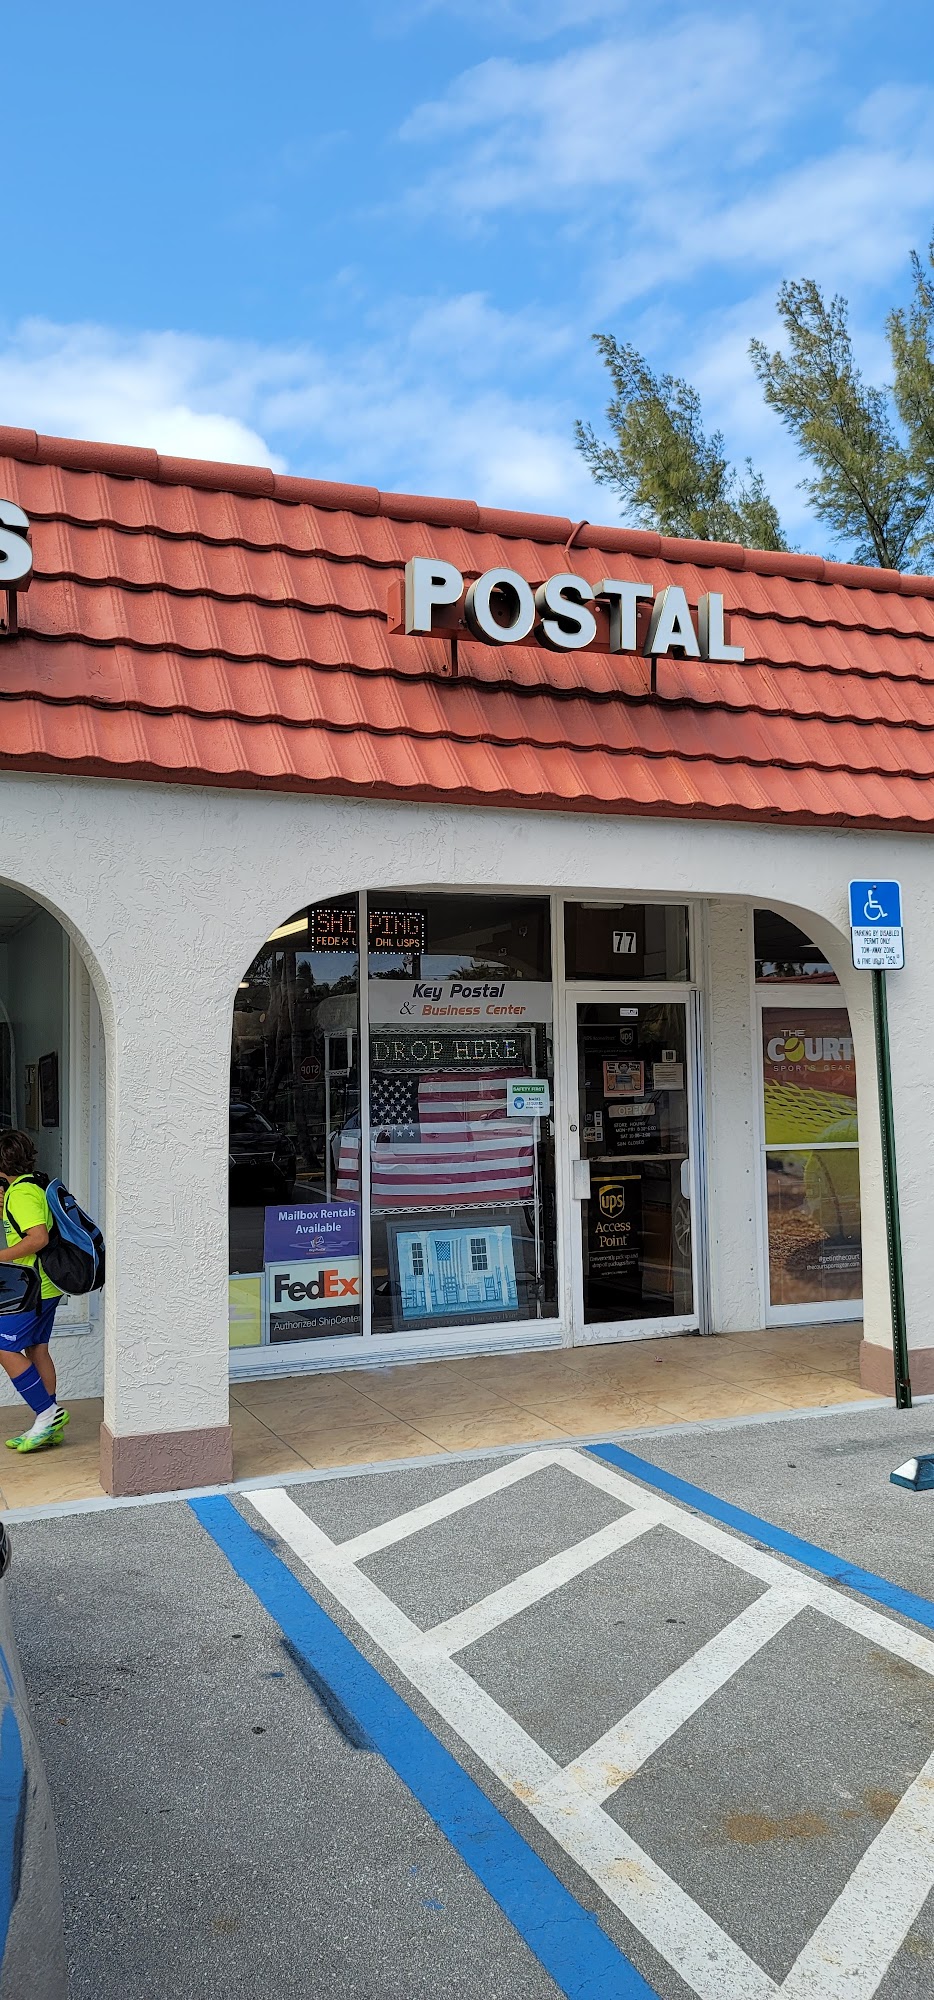 Key Postal & Business Center